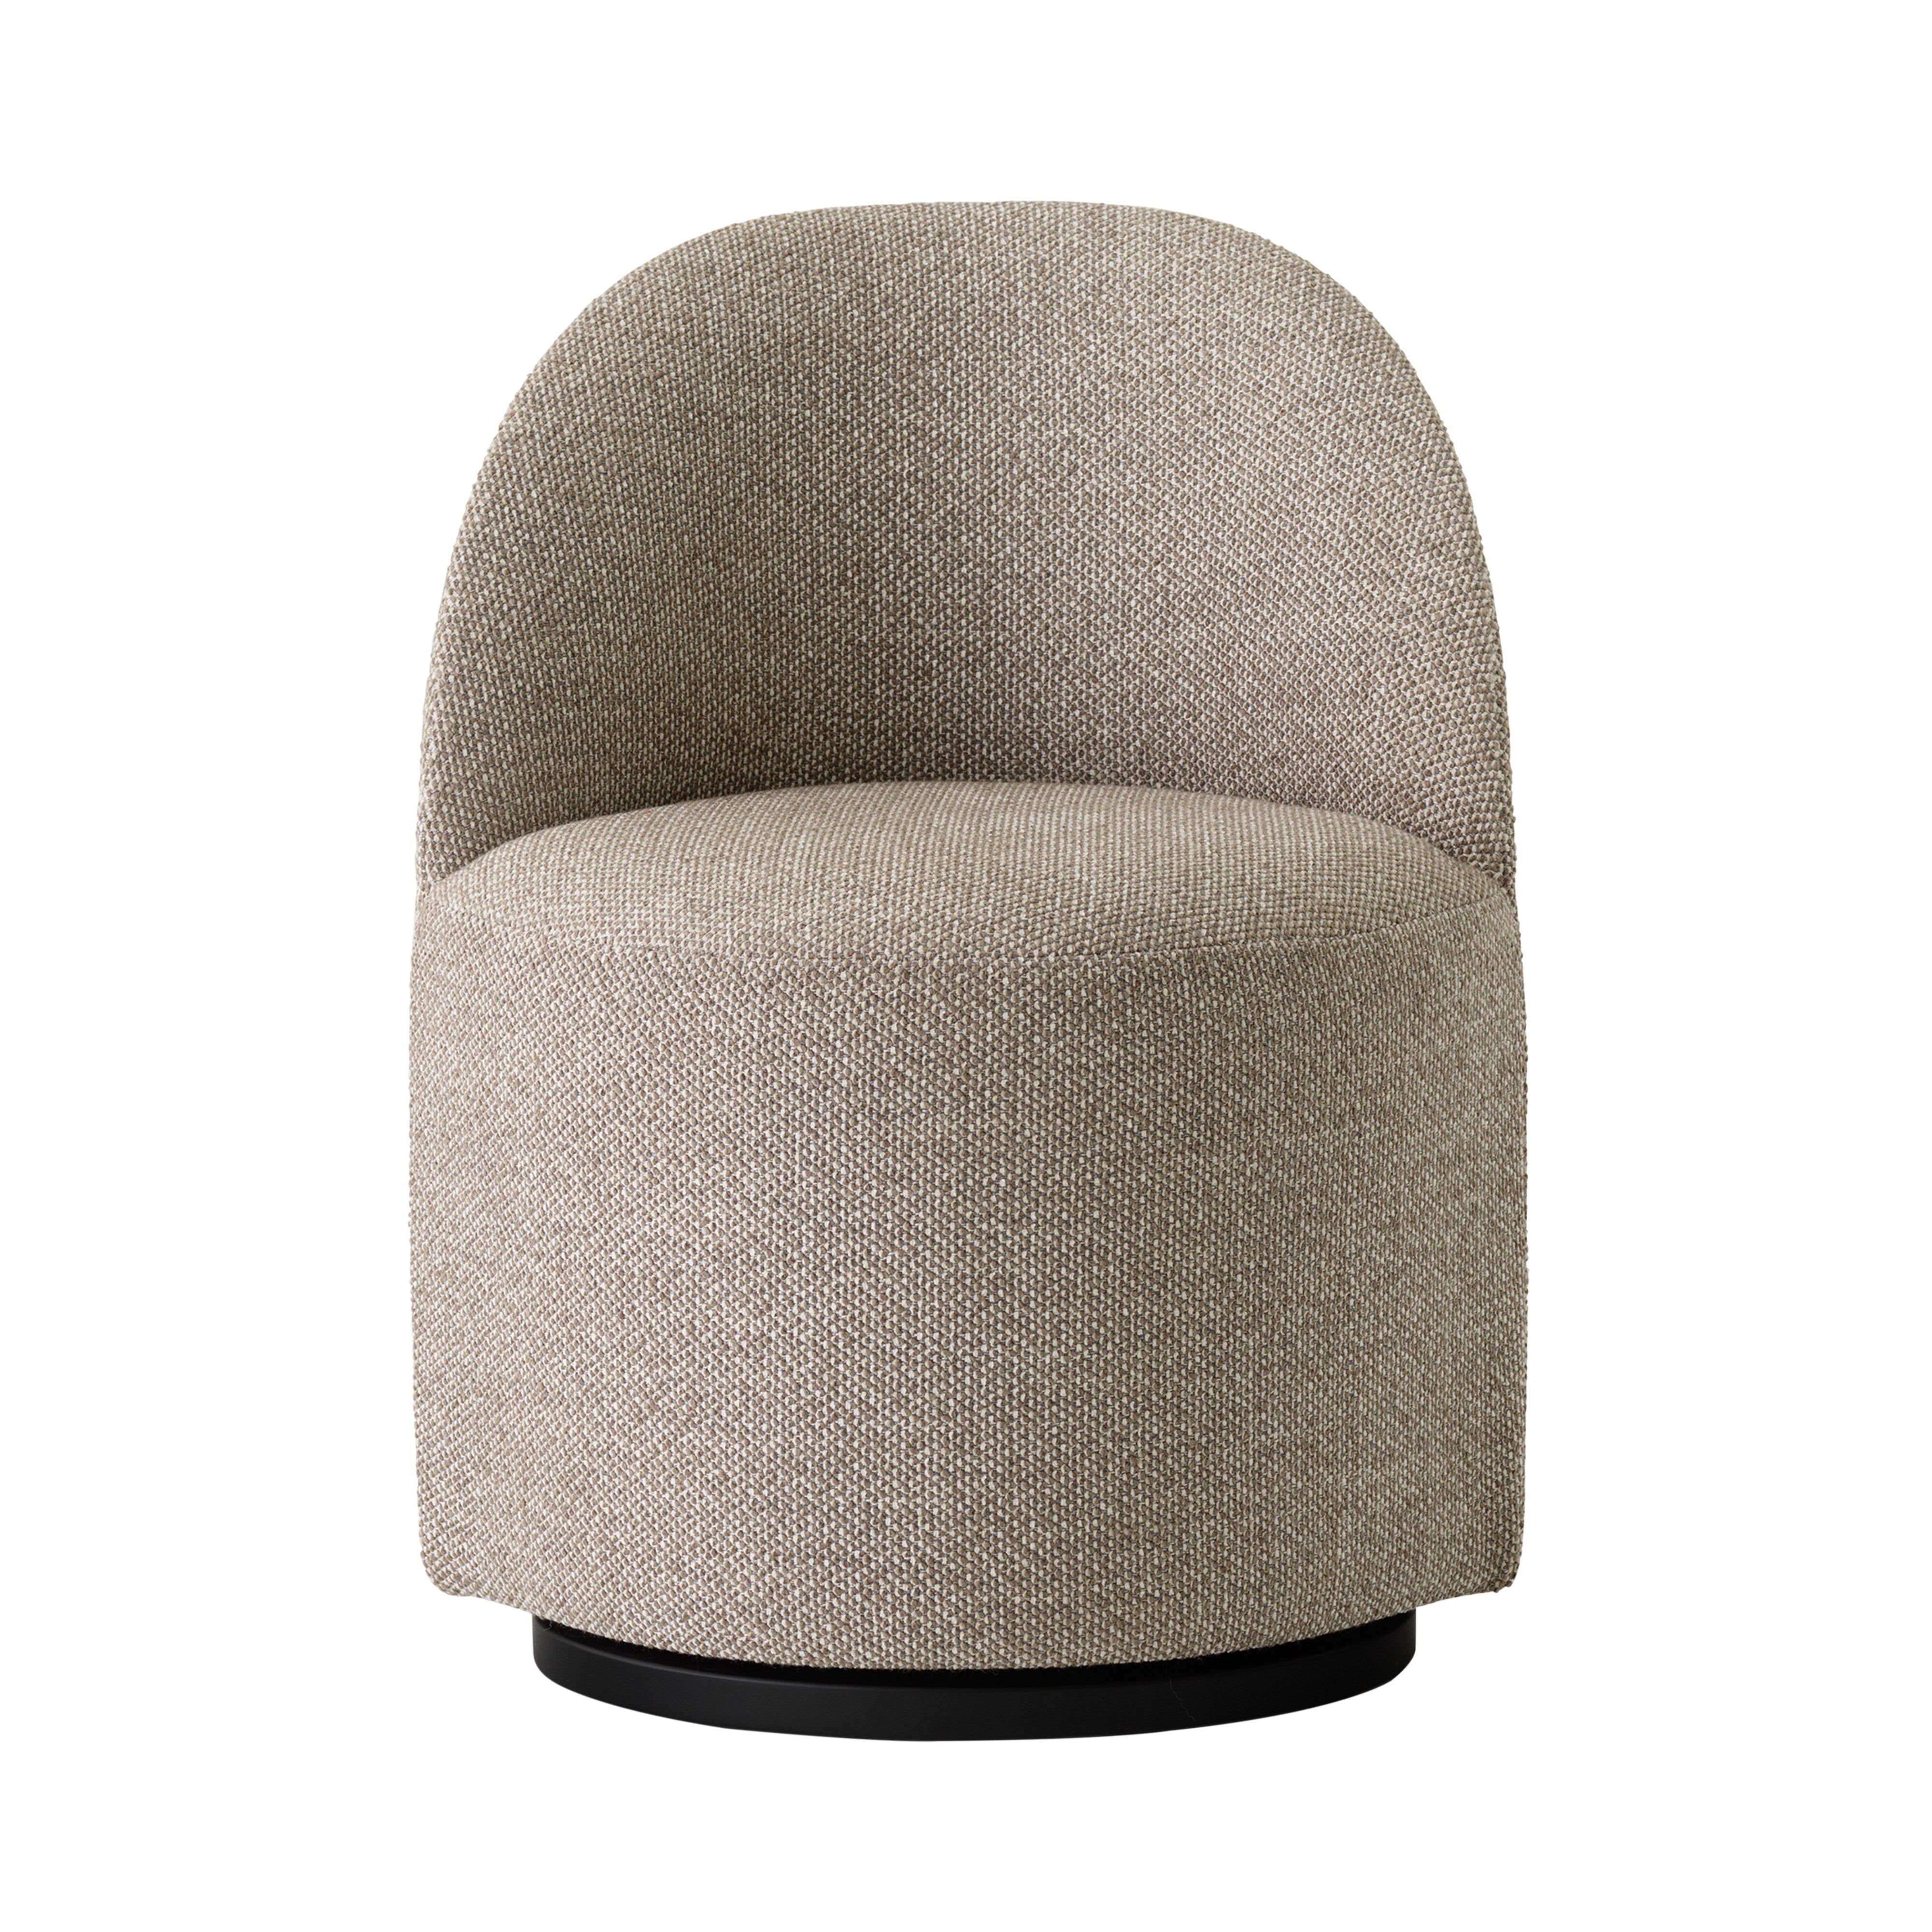 Tearoom Swivel Side Chair: Safire 004